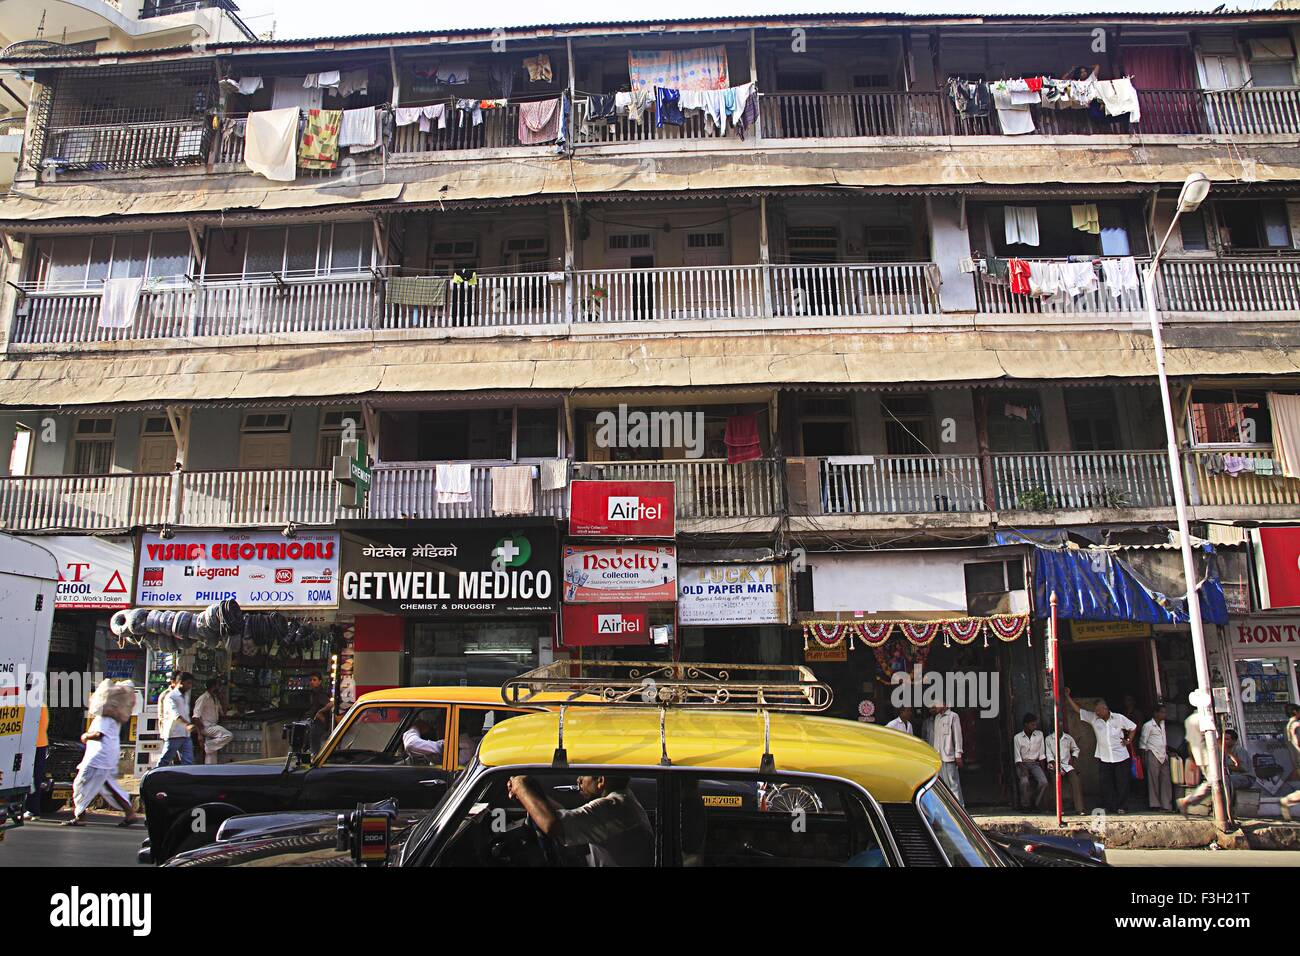 Old taraporwala building chawl mass urban housing ; August kranti marg ; Grant Road ; Bombay Mumbai ; Maharashtra ; India Stock Photo